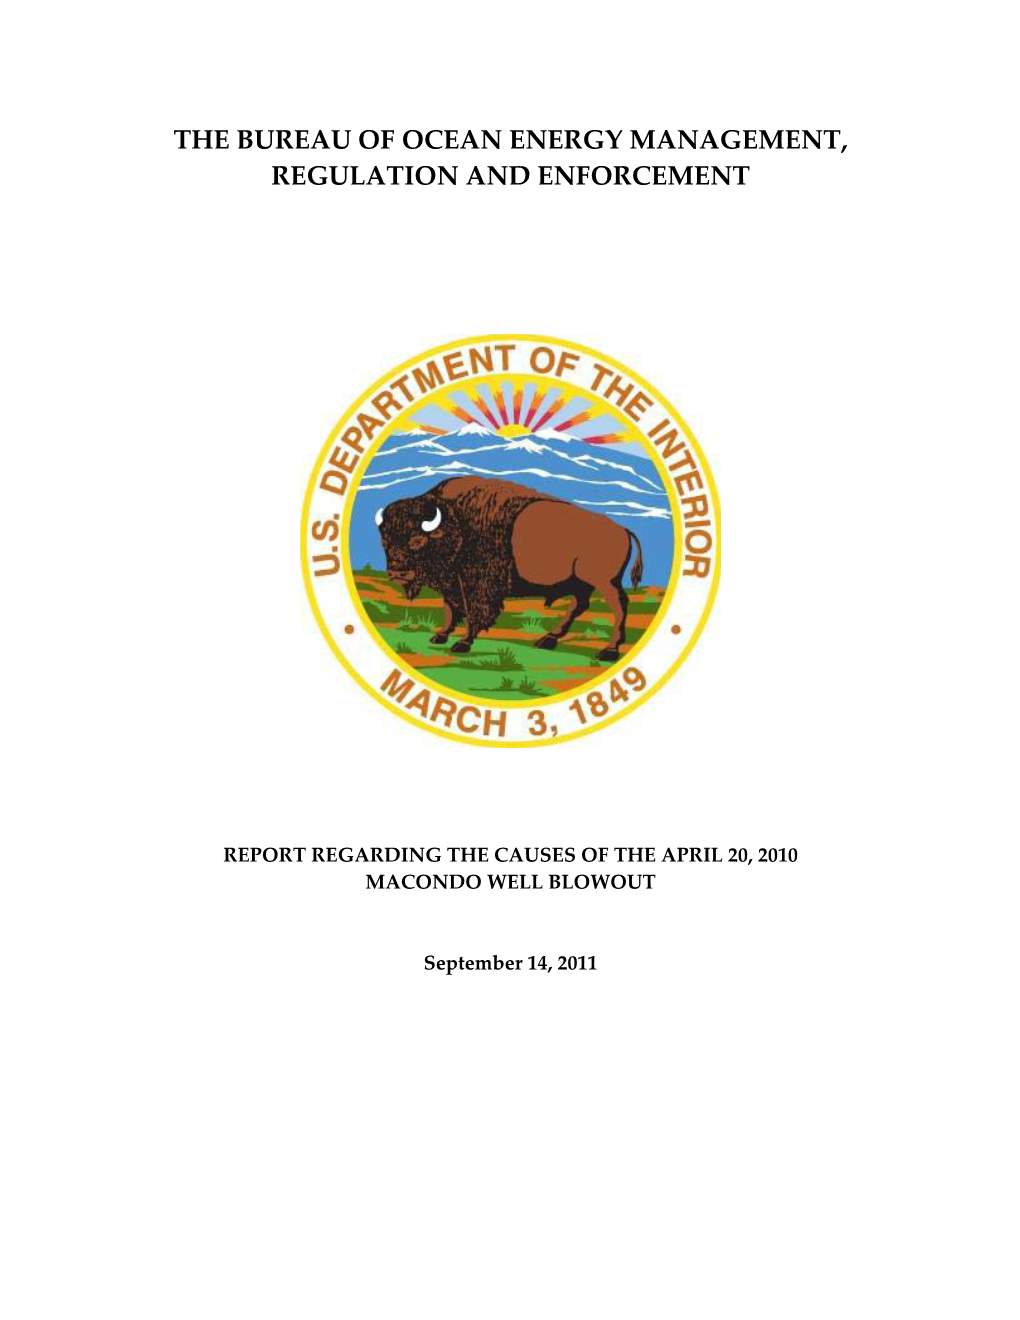 The Bureau of Ocean Energy Management, Regulation and Enforcement